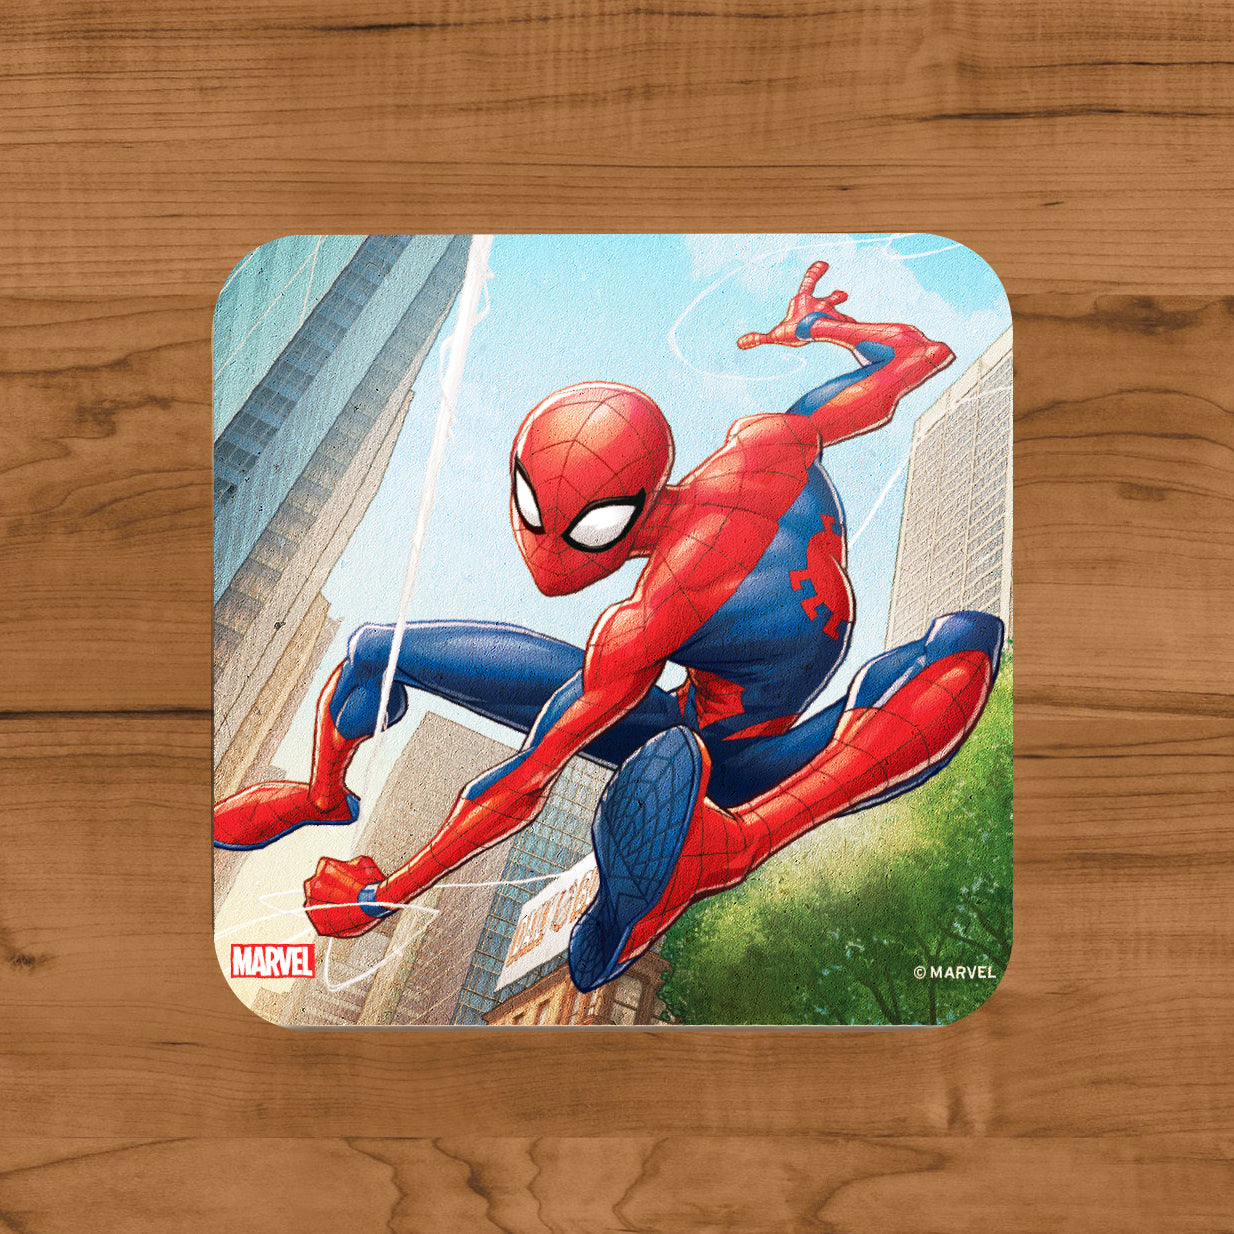 Spider-Man: Spider-Man City Swinging        - Officially Licensed Marvel    Coaster